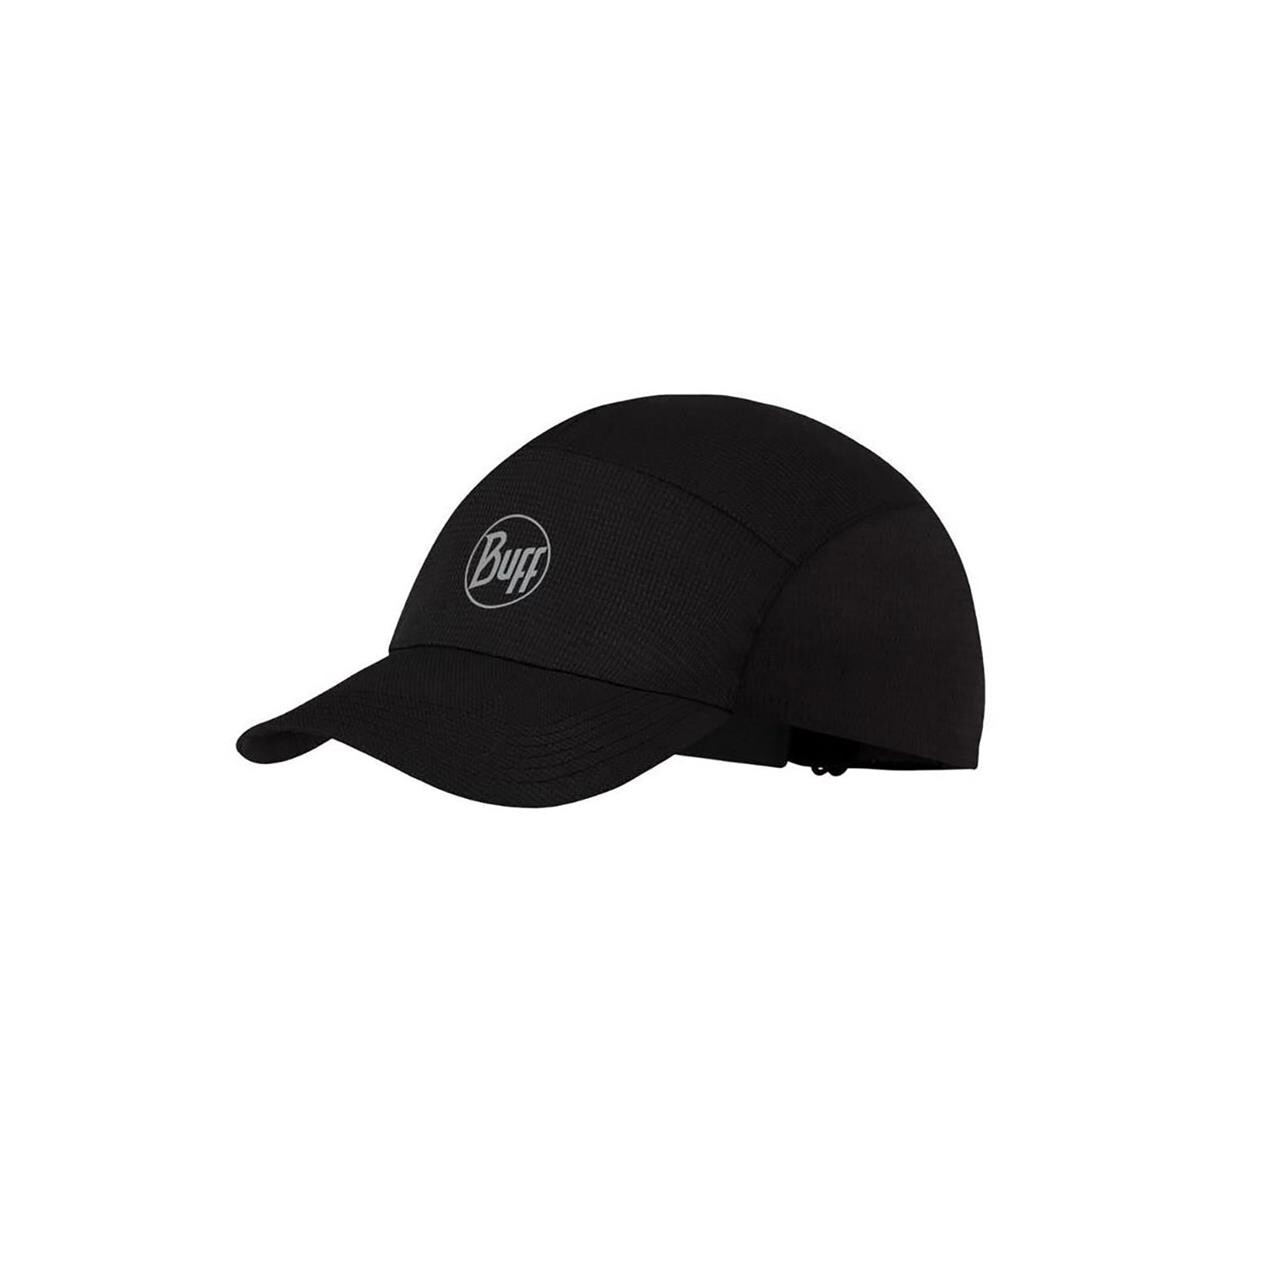 Buff Solide Fuchsia Trek Baseball cap/hat Small Medium 